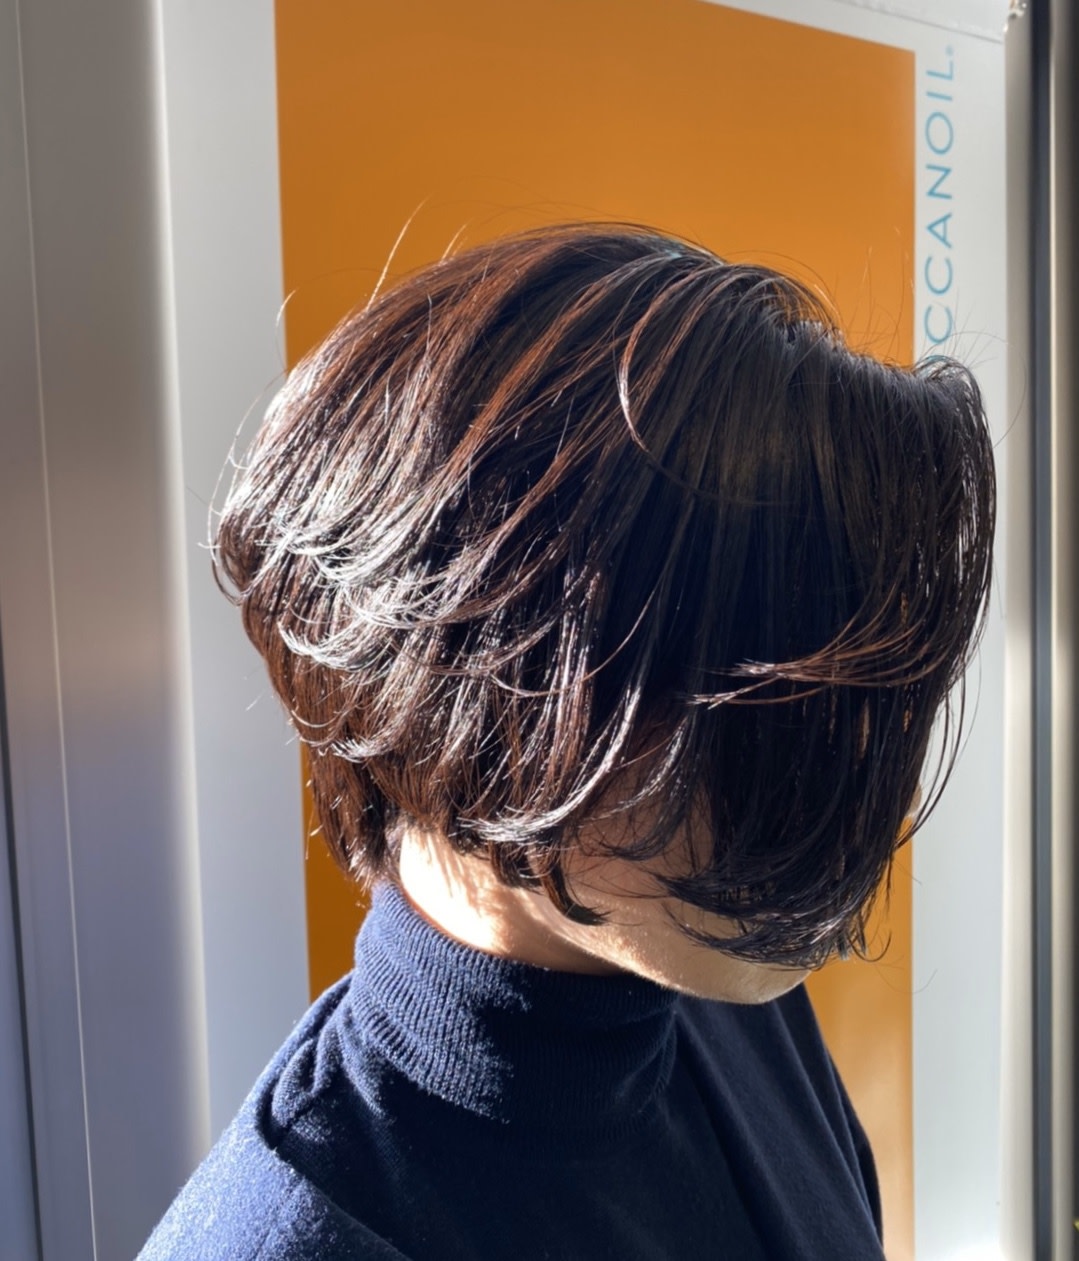 OGG hair【オグヘアー】のスタイル紹介。ニュアンスショートスタイル